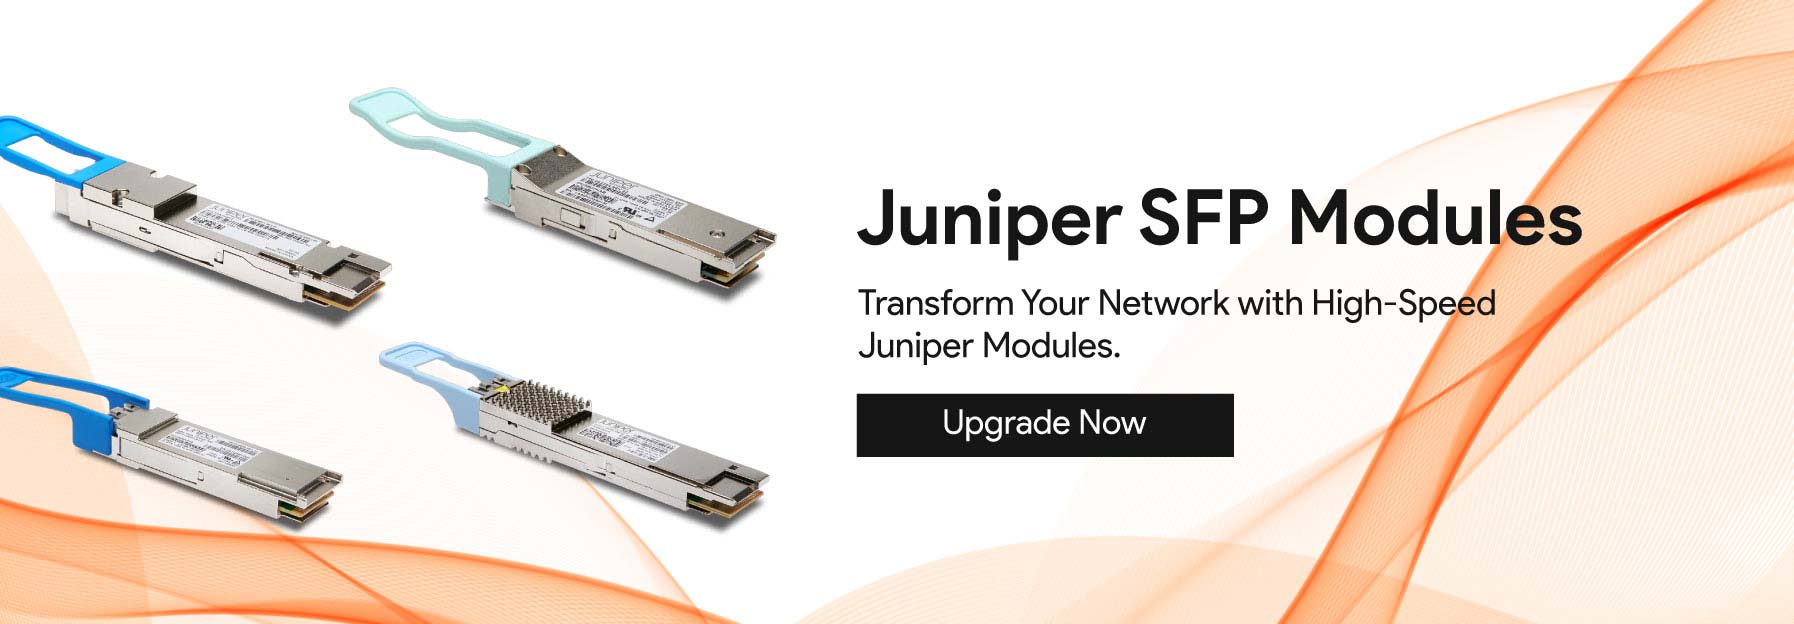 Juniper-SFP-Modules